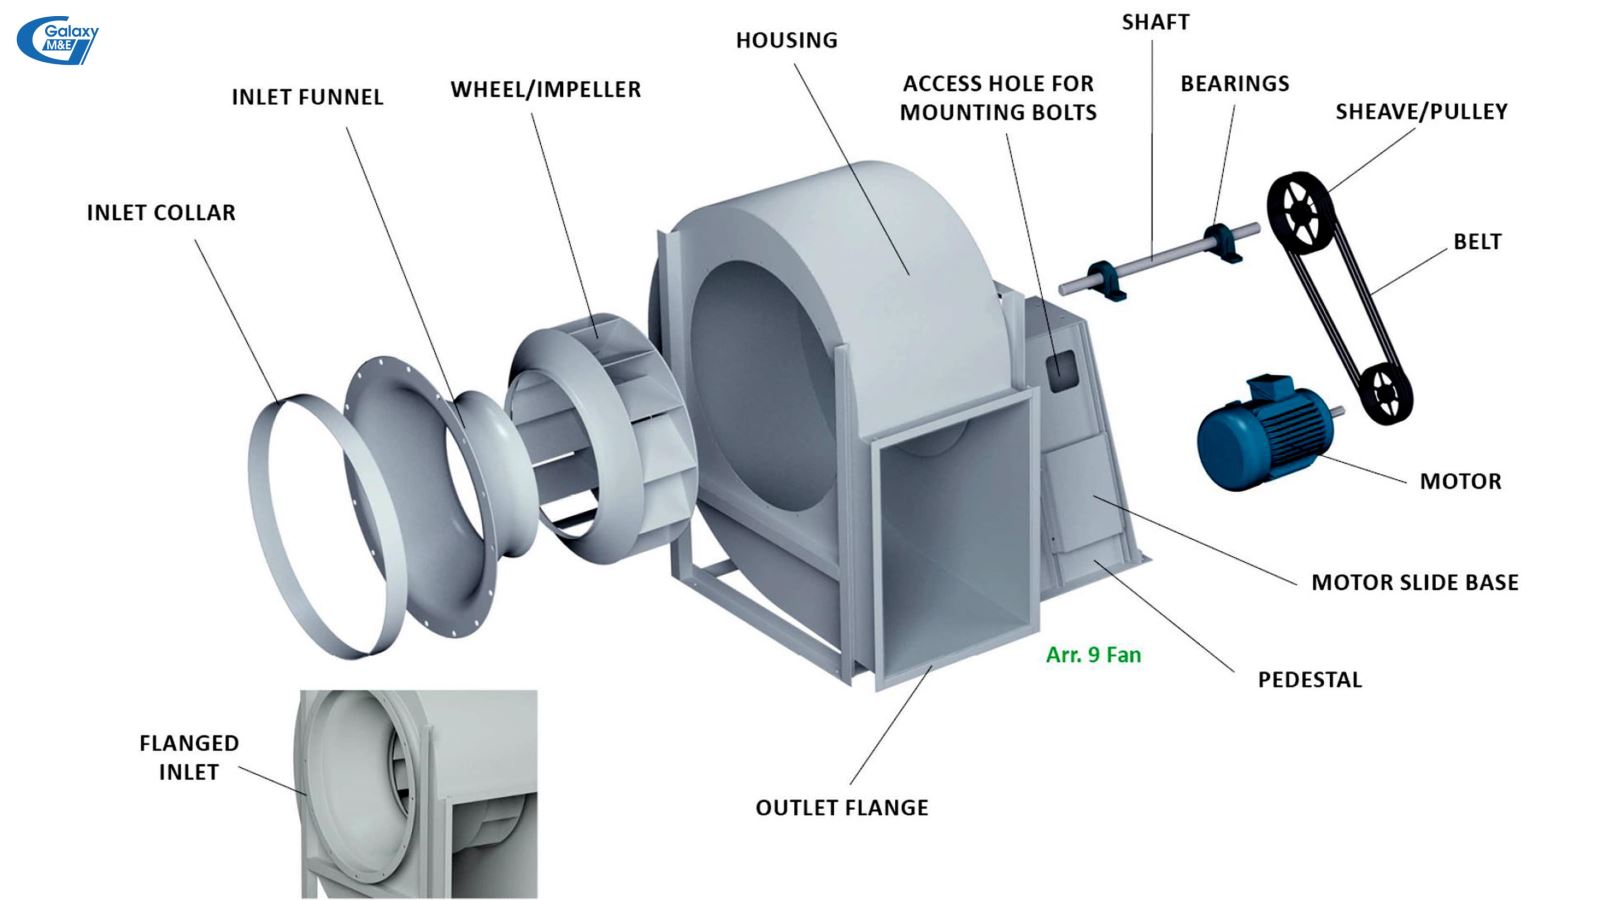 Design of centrifugal pressurized fans.